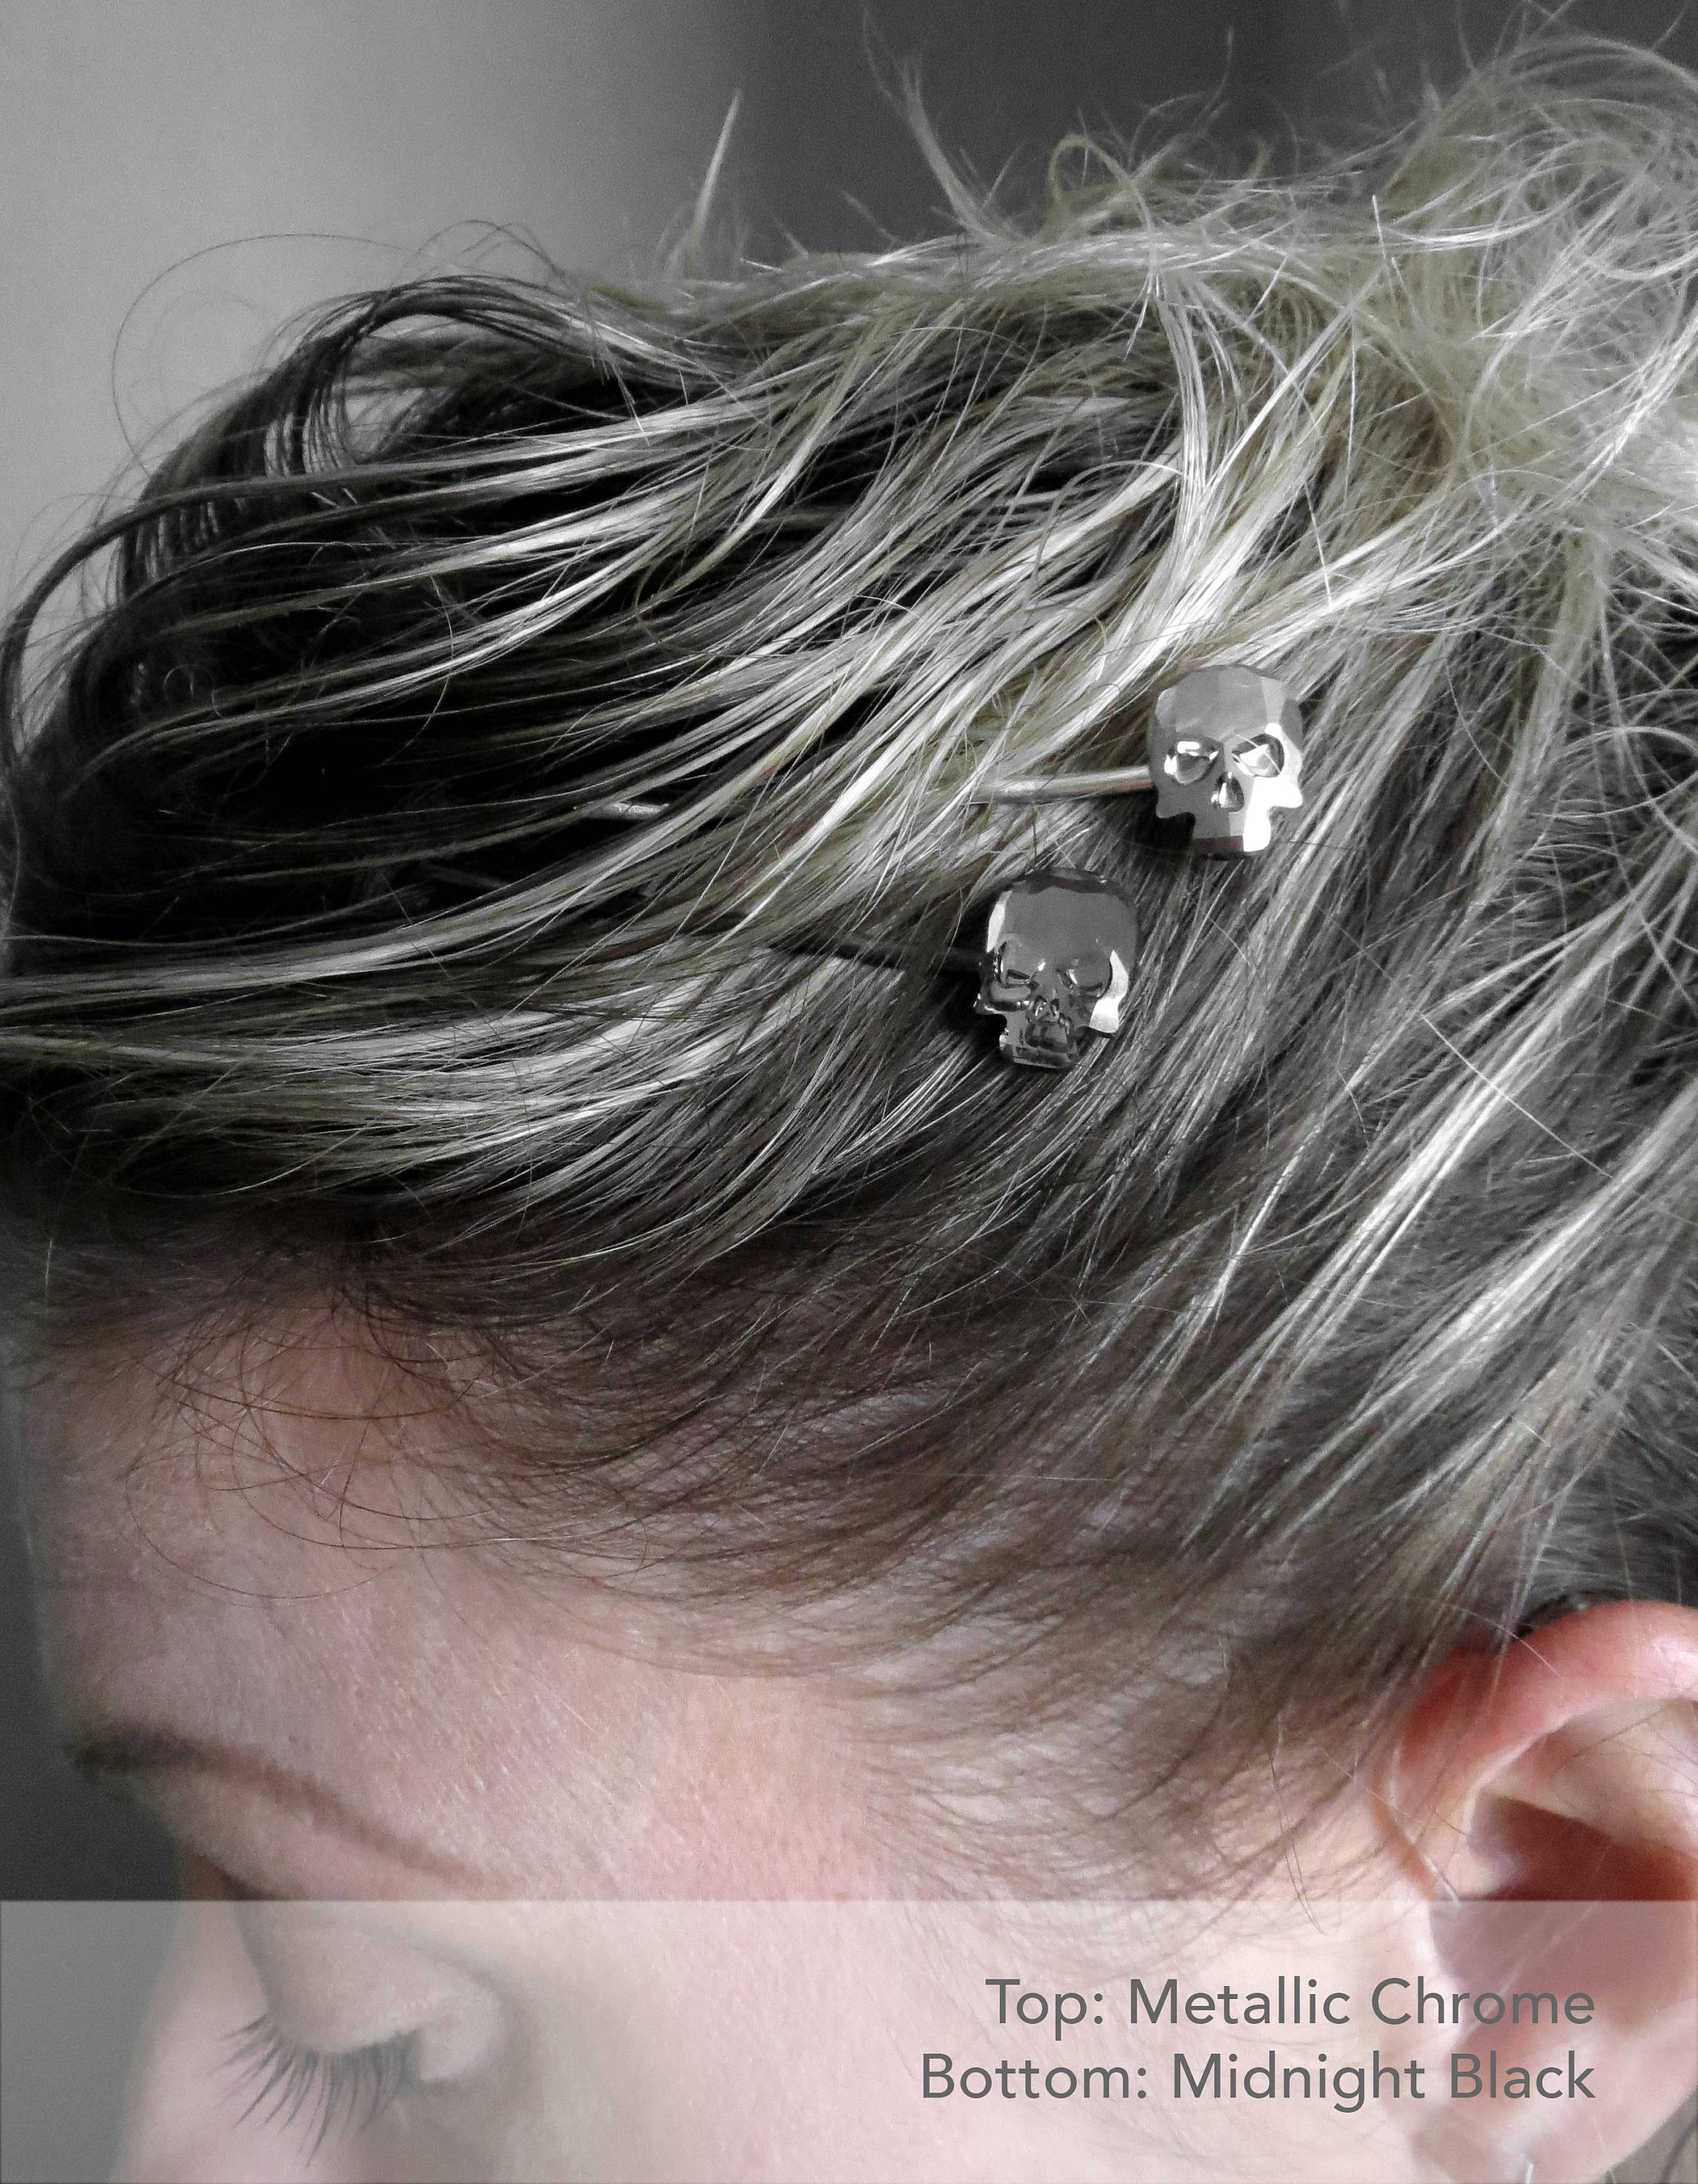 Crystal Skull Bobby Hair Pins - Silver Chrome Color, Set of 2